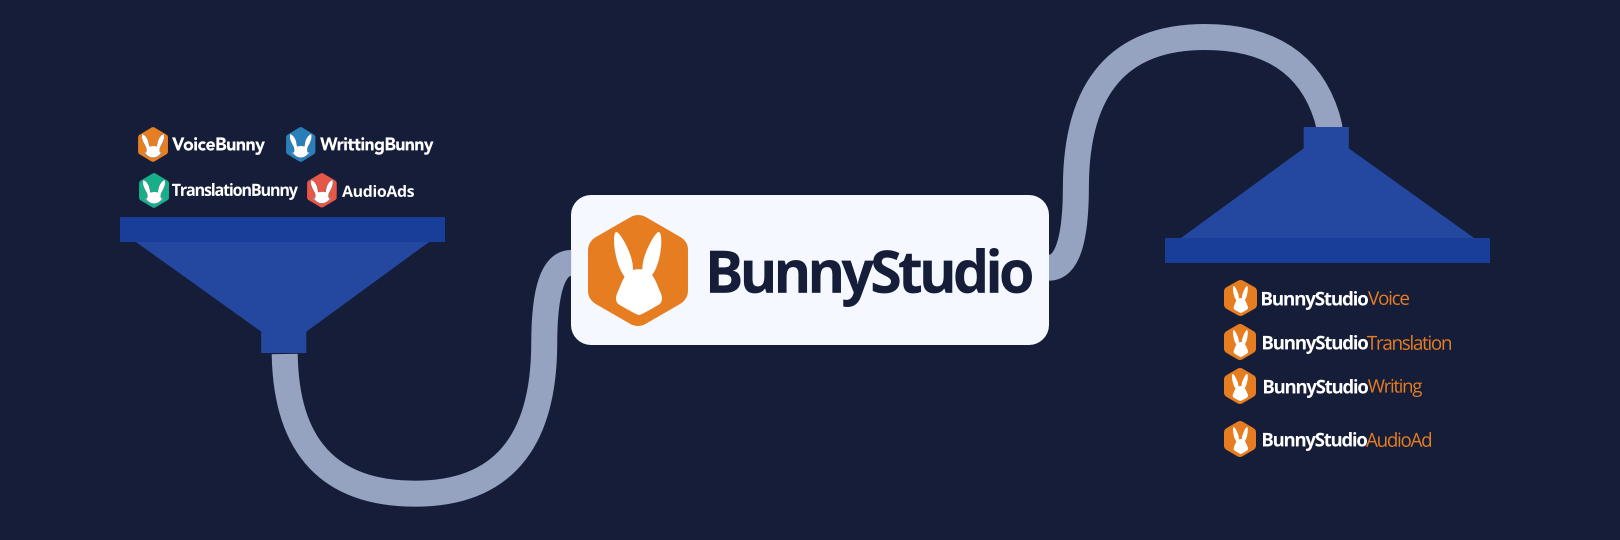 Bunny-Studio-Announcement-Funnel